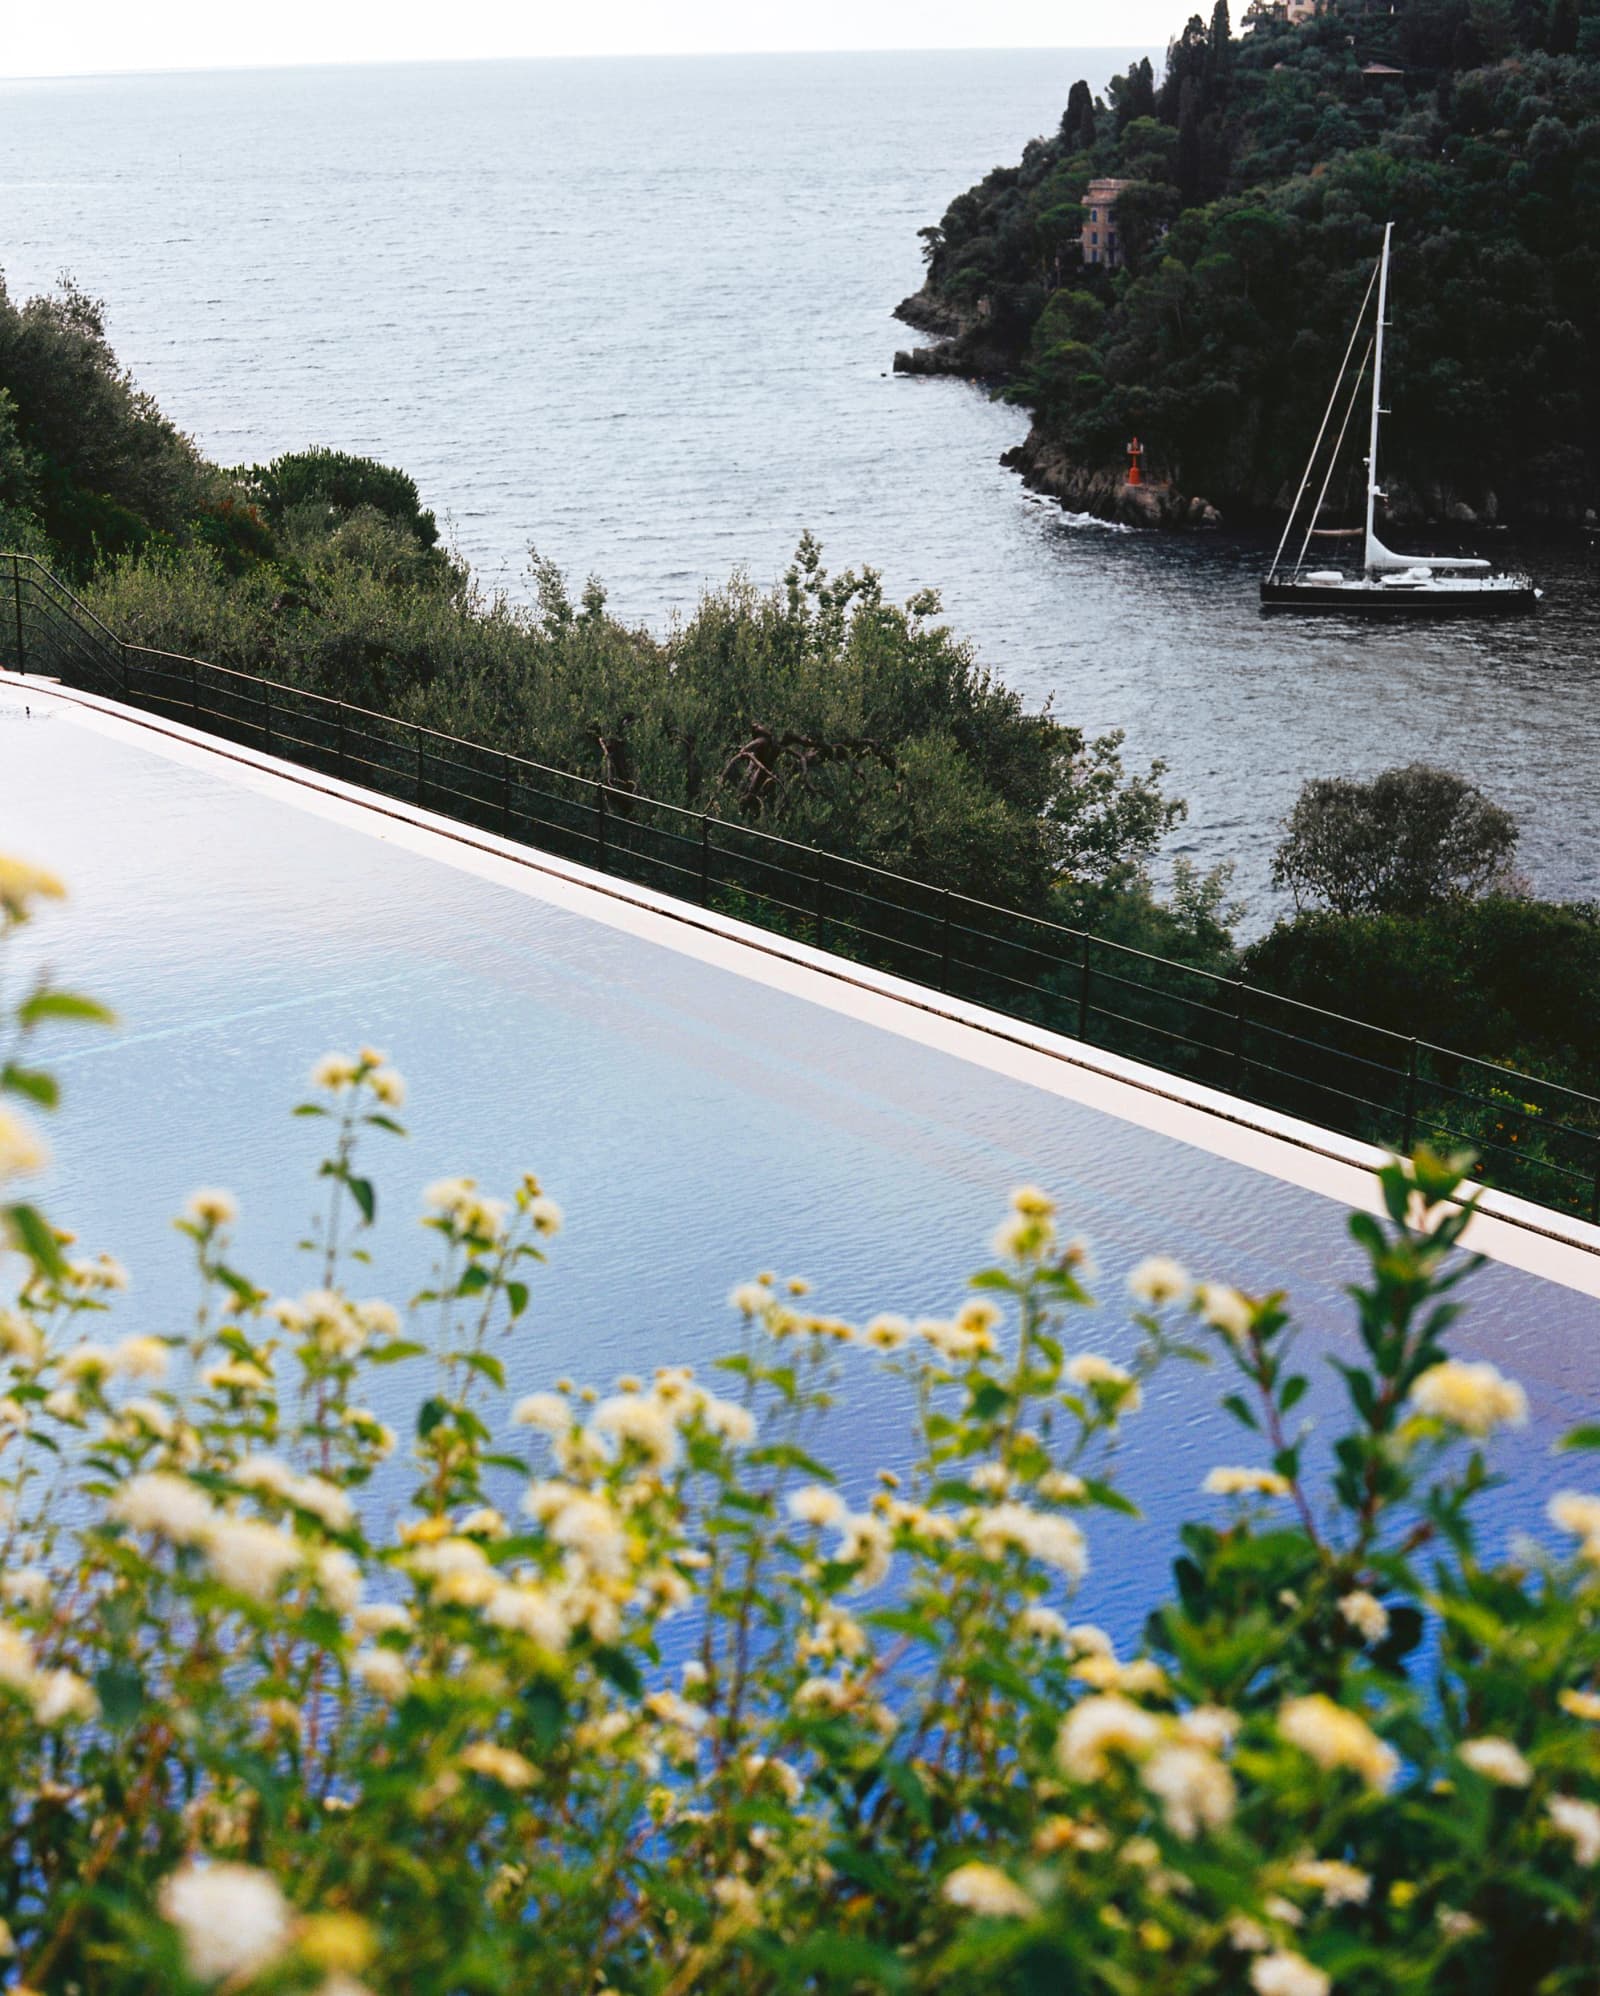 Images of Hotel Splendido | Pictures of Portofino